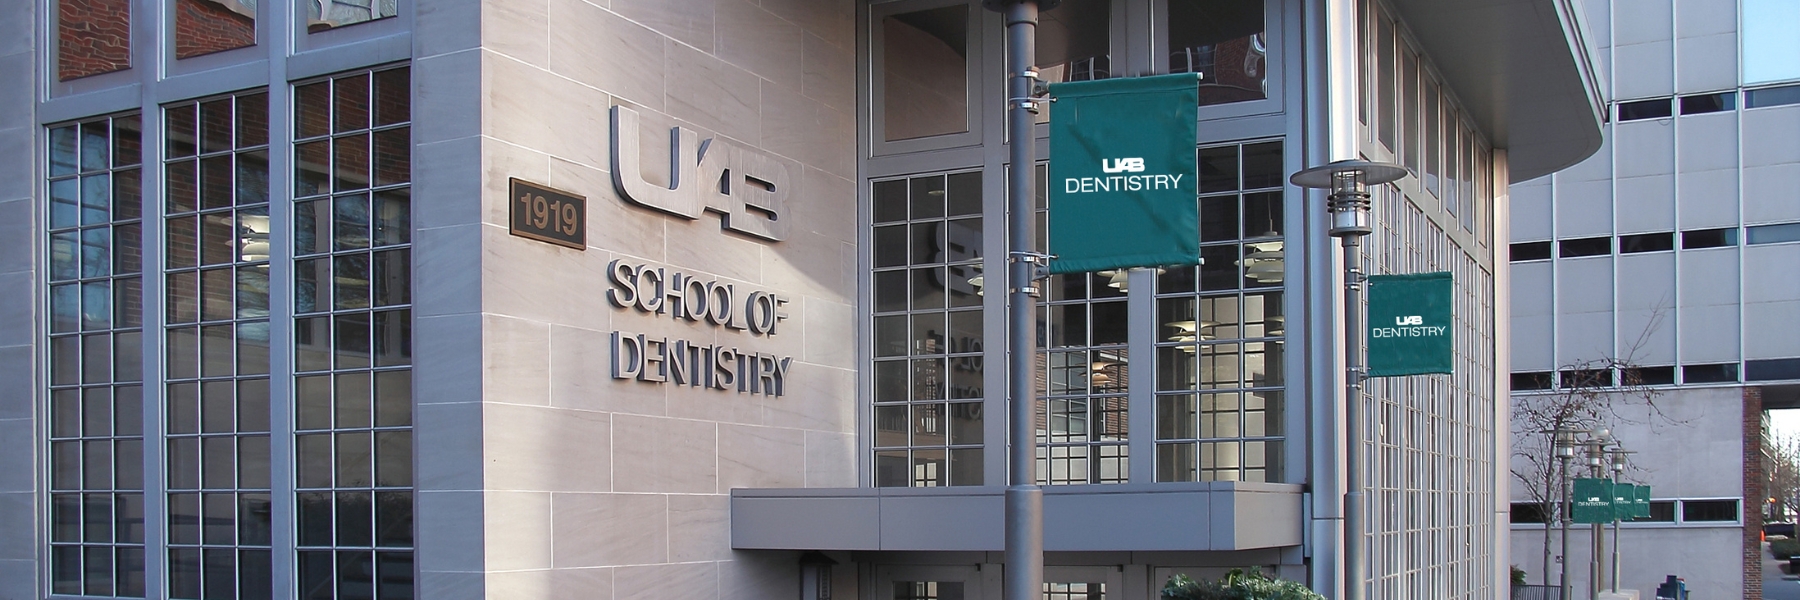 University of Alabama School of Dentistry